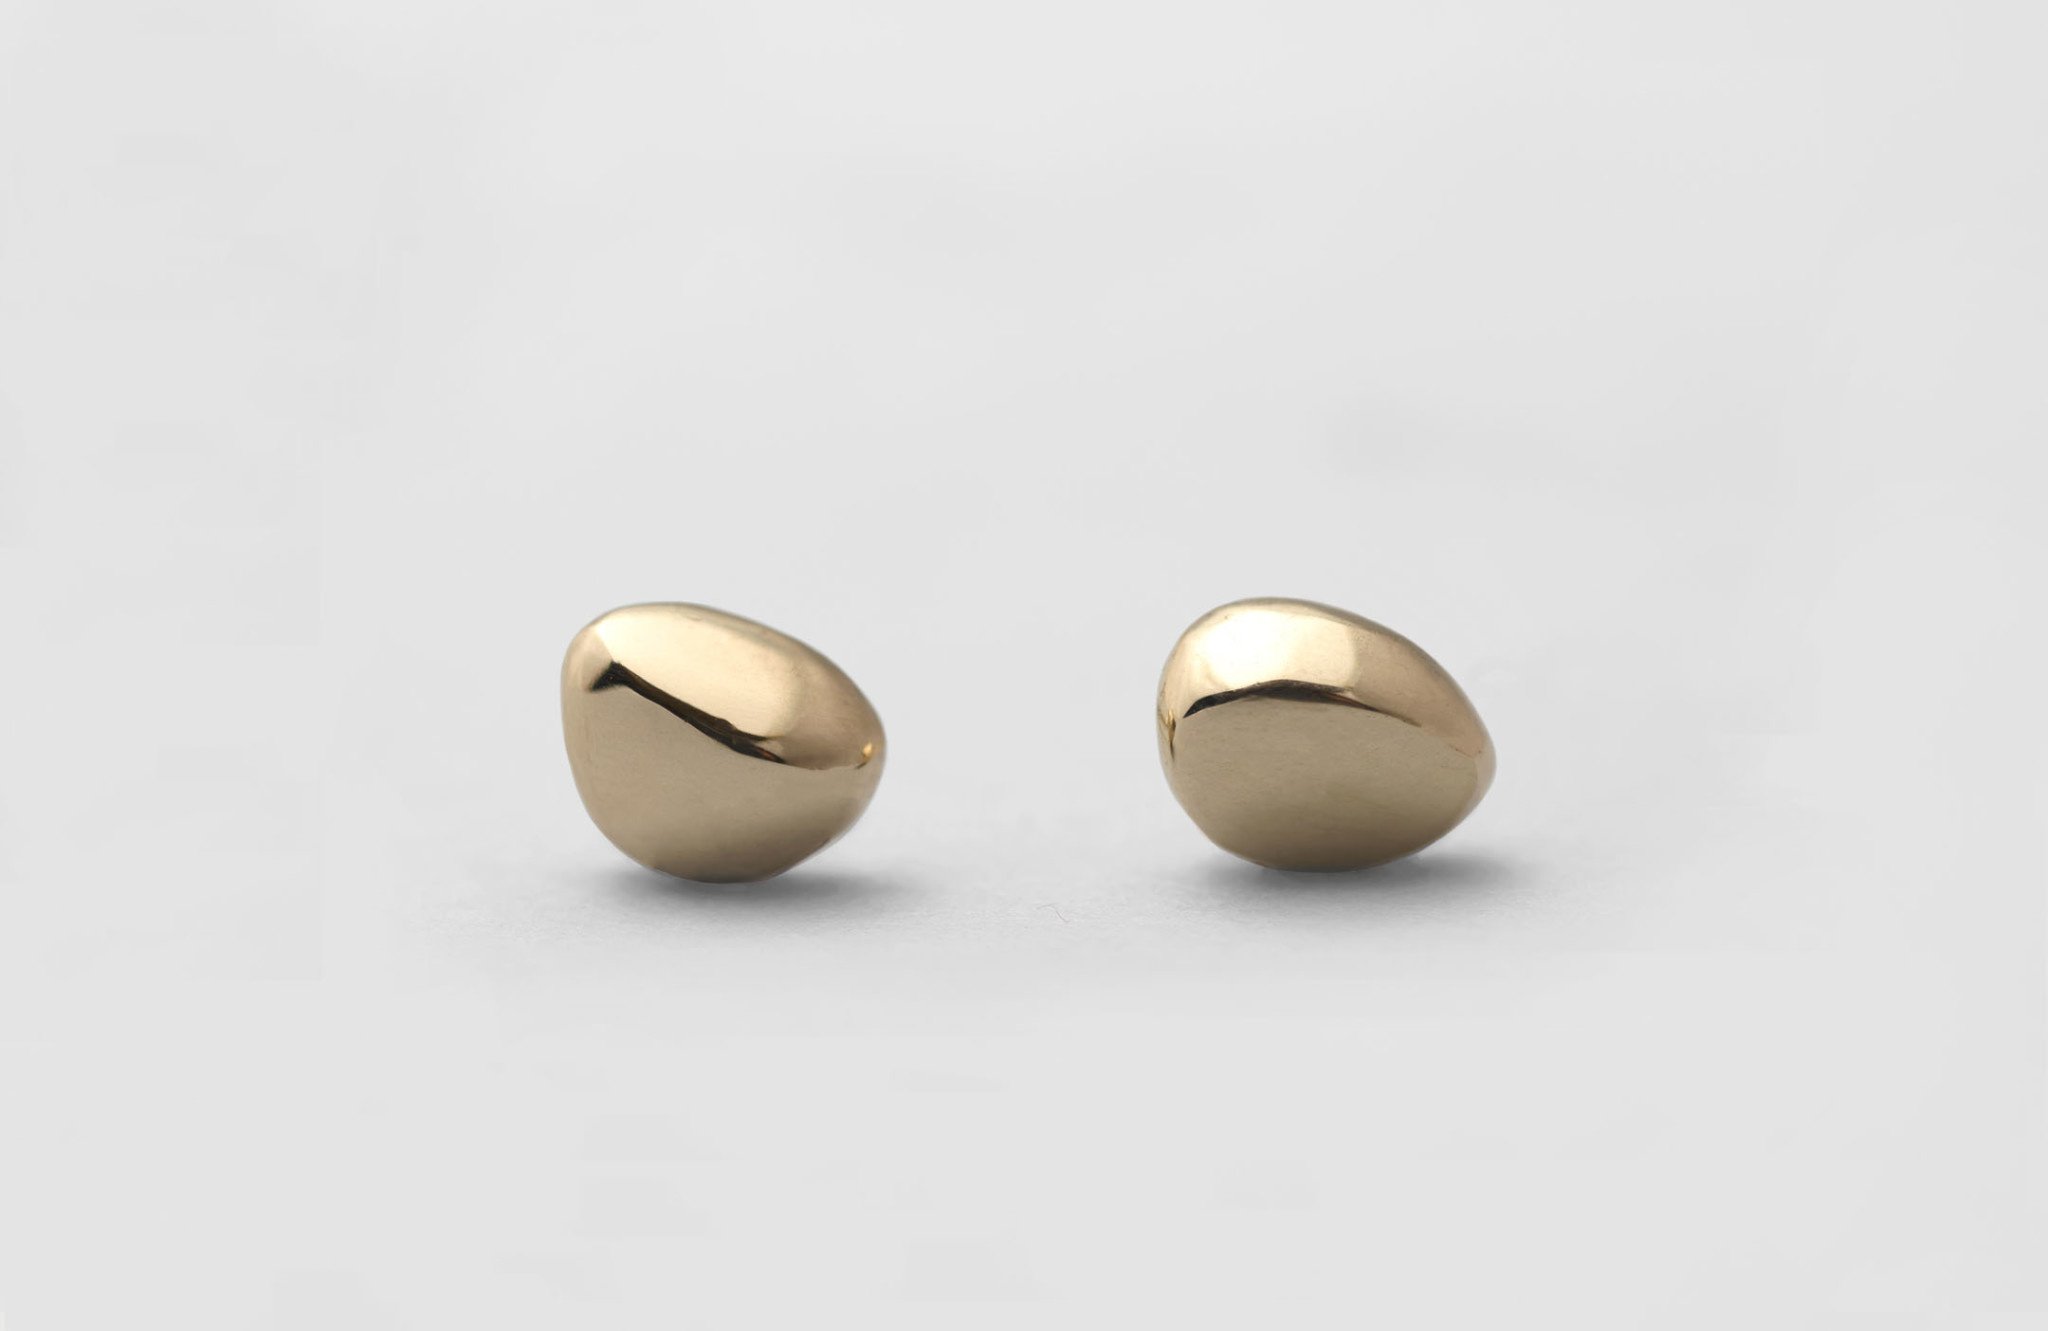 Orii Design Earrings - Pebble Studs 14K Yellow Gold